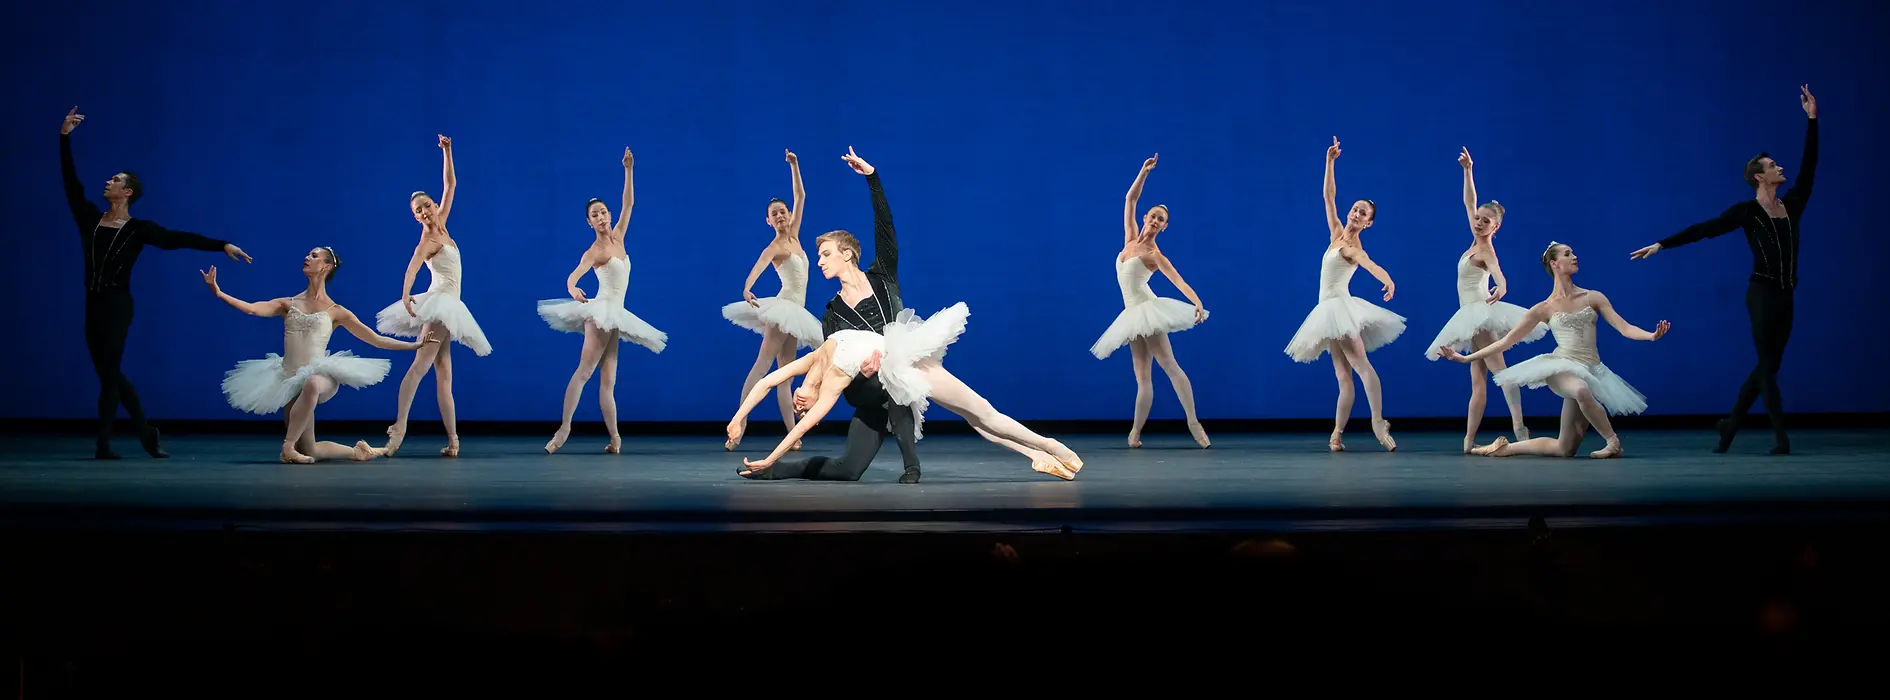 Ifbc Ballet classes